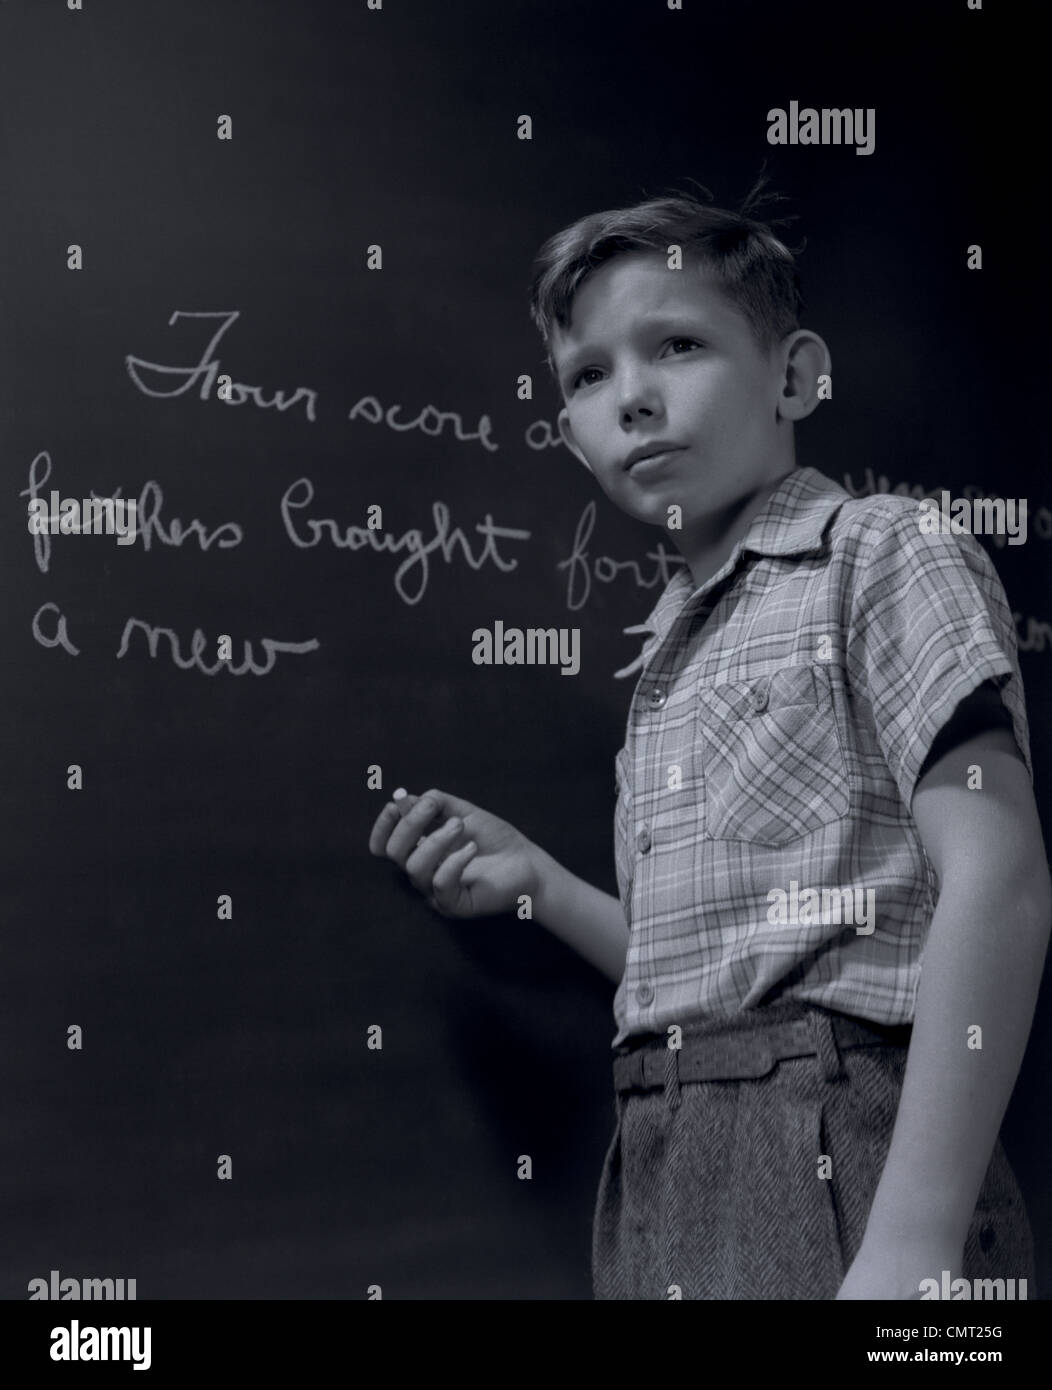 1940s GRADE SCHOOL BOY AT CHALKBOARD WRITING OUT GETTYSBURG ADDRESS Stock Photo